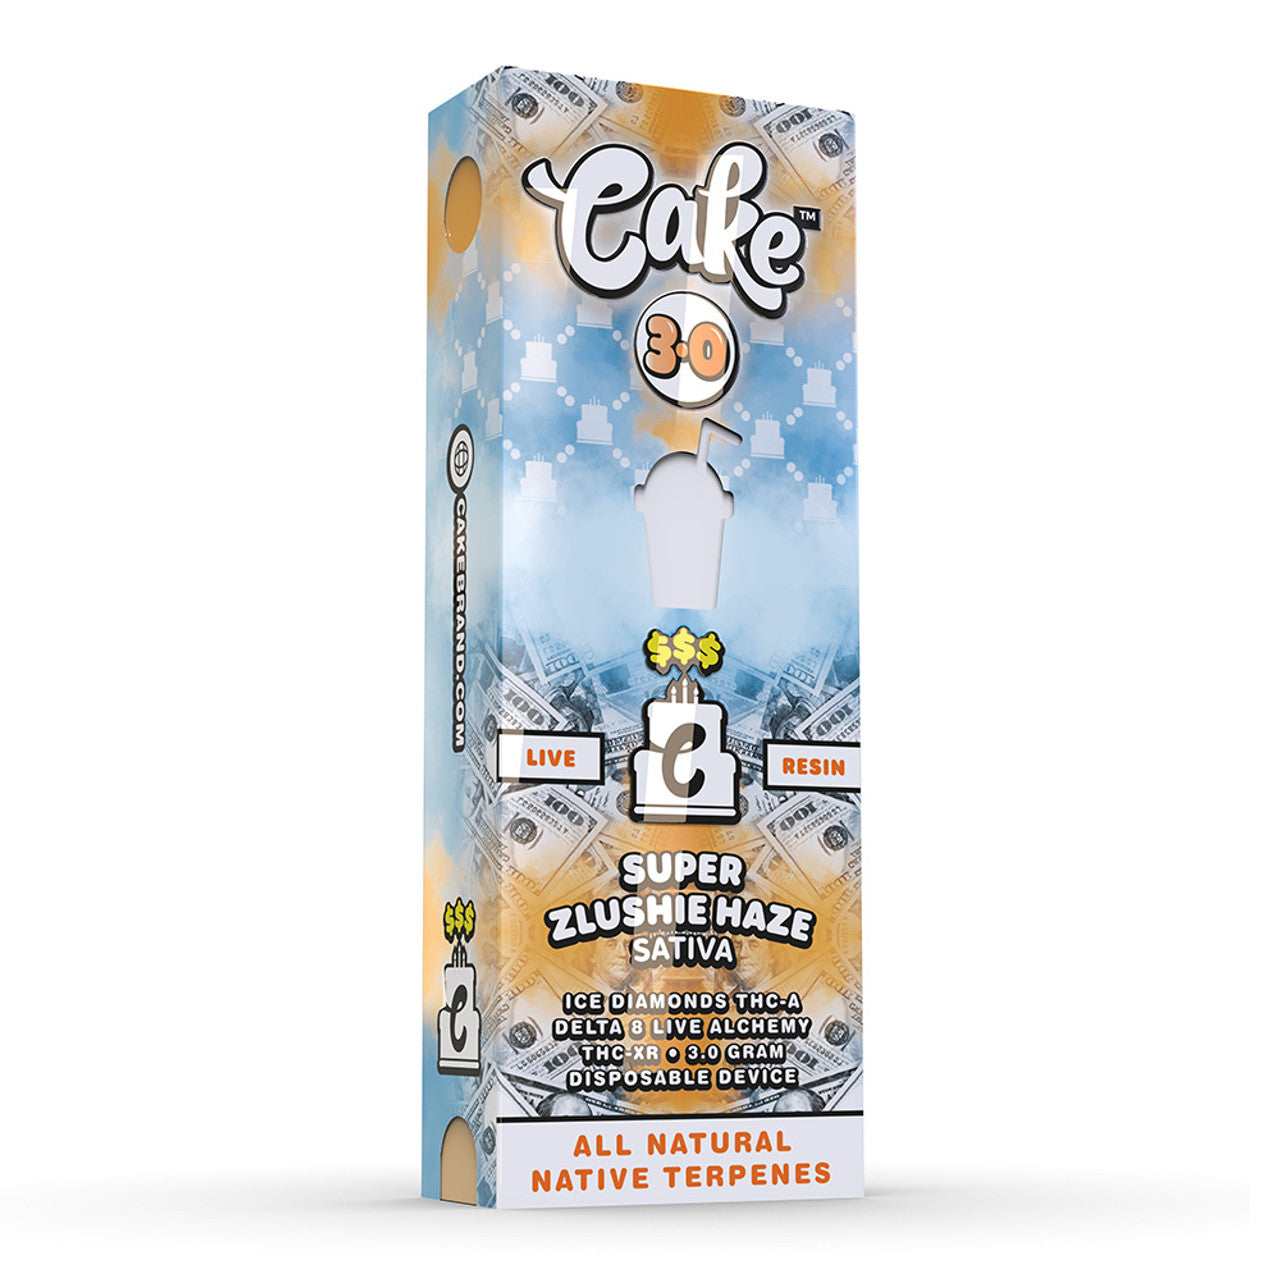 CAKE 3.0 Money Line Live Resin Ice Diamonds THC-A + Delta 8 Live Alchemy + THC-XR Disposable 3G - Super Zlushie Haze (Sativa)